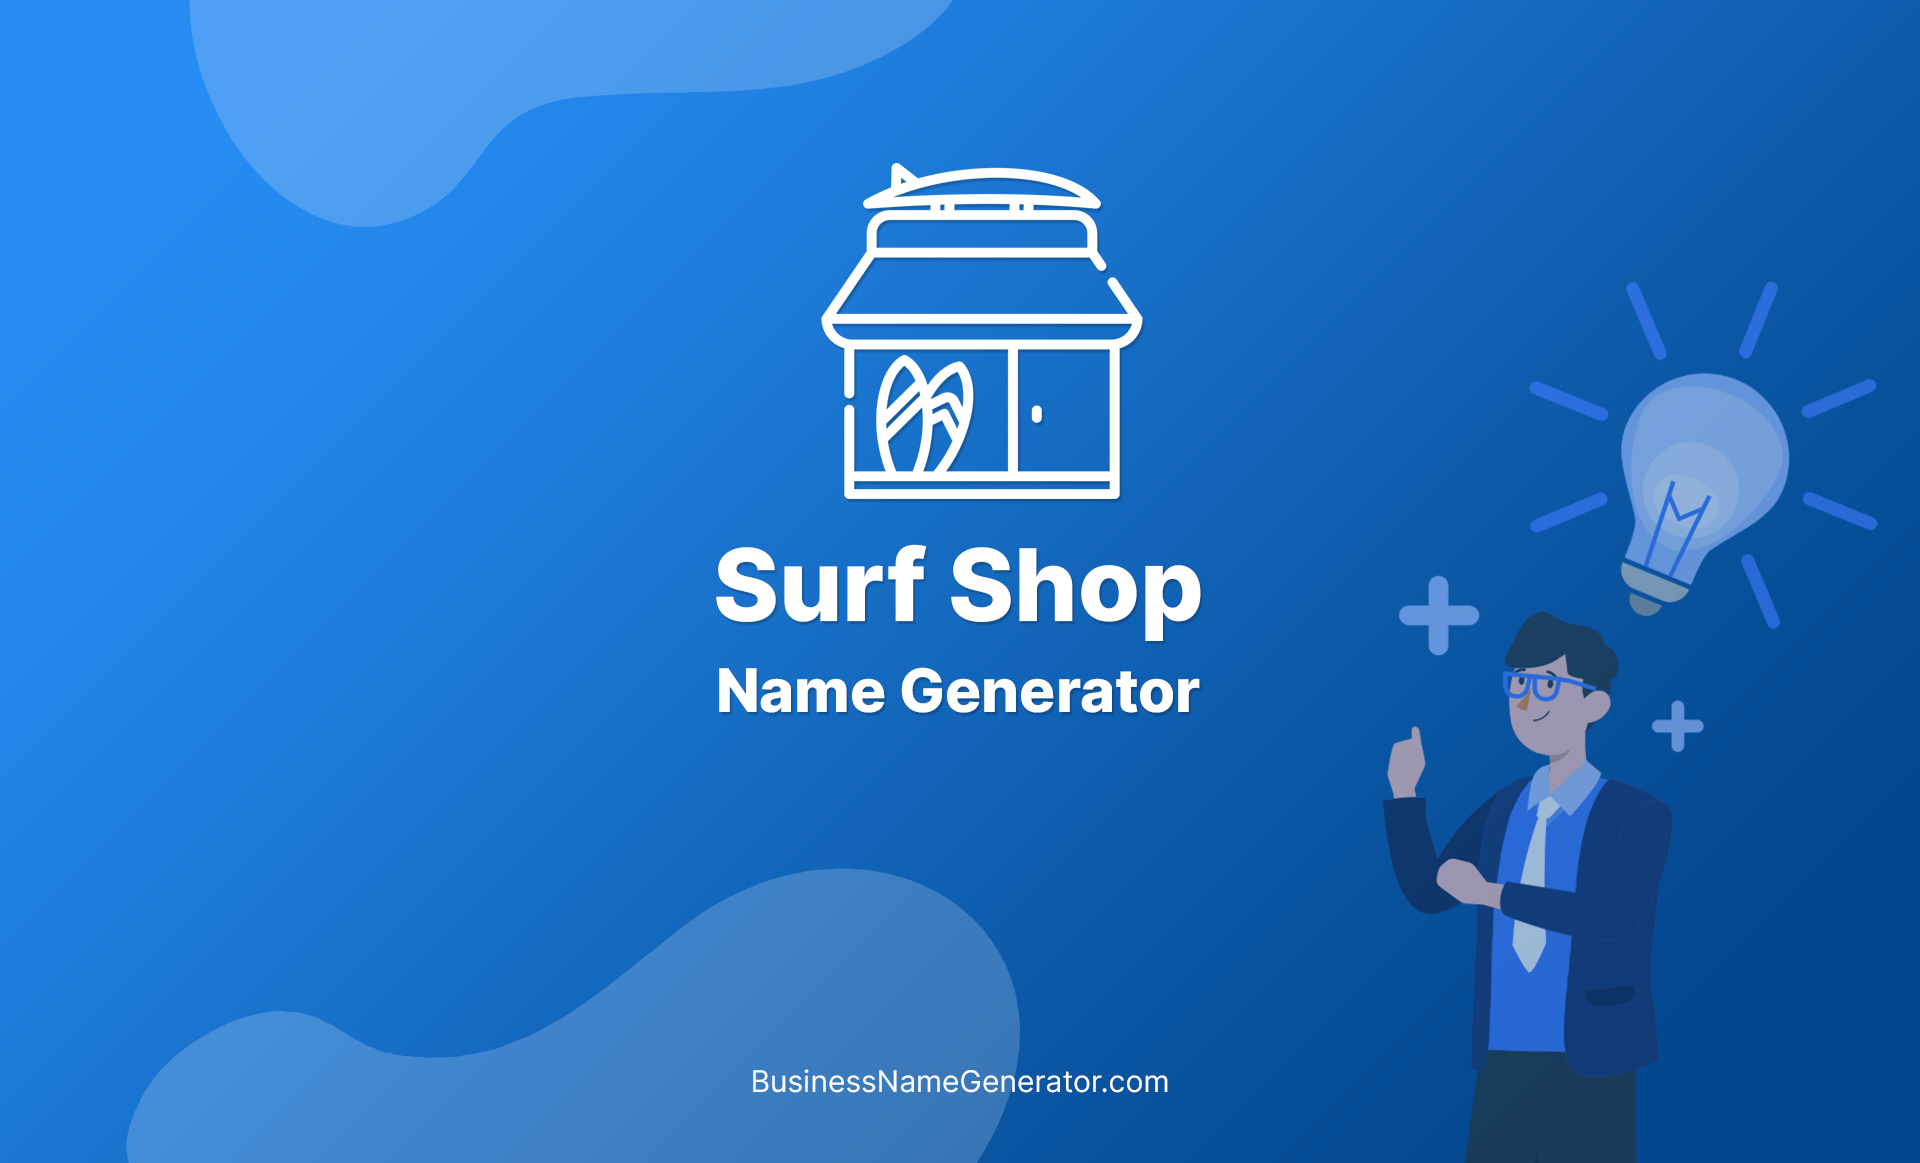 Surf Shop Name Generator